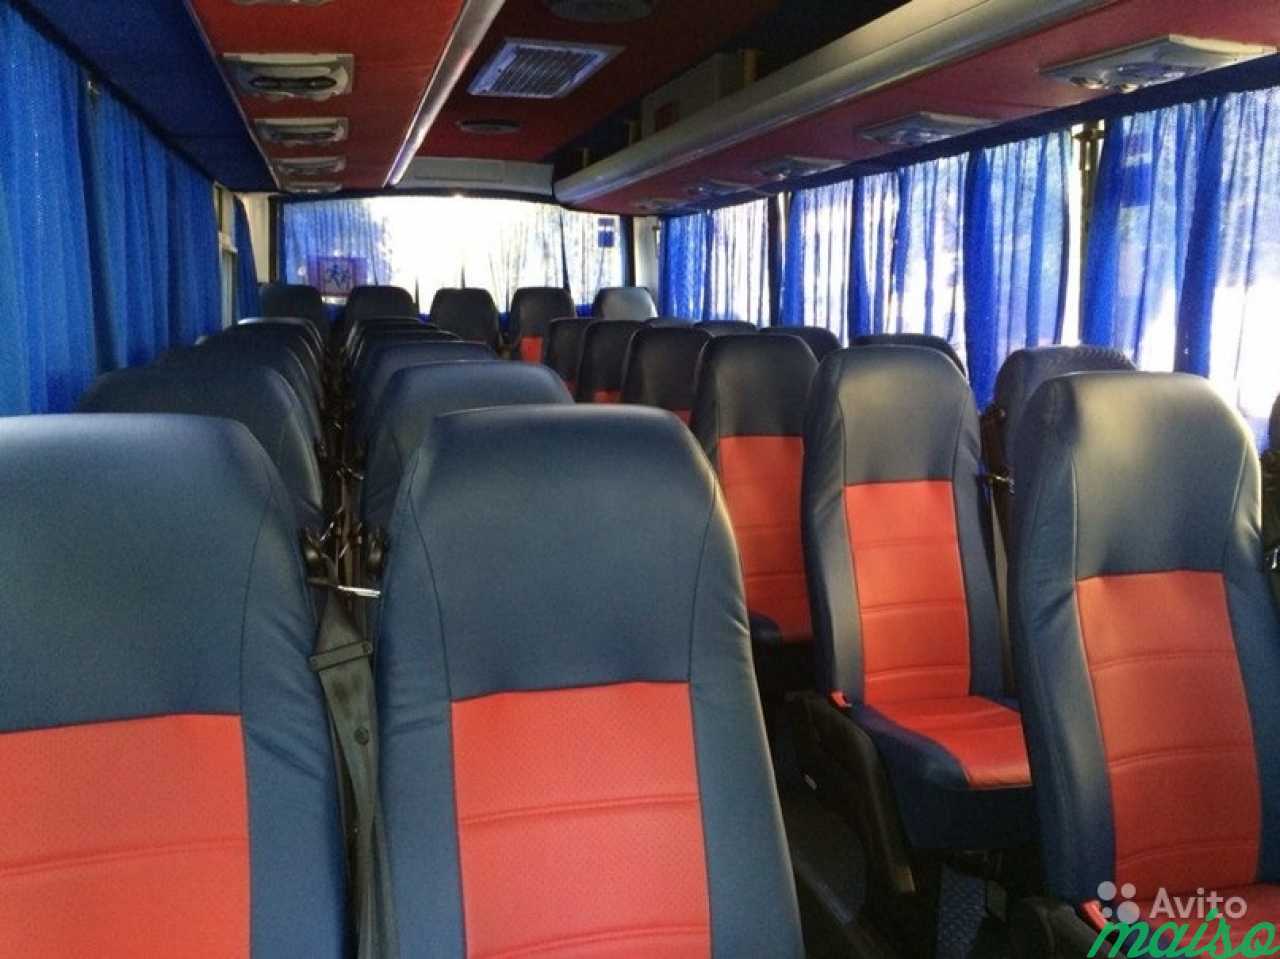 Заказ автобуса на 30 мест и 20 мест в Санкт-Петербурге. Фото 2